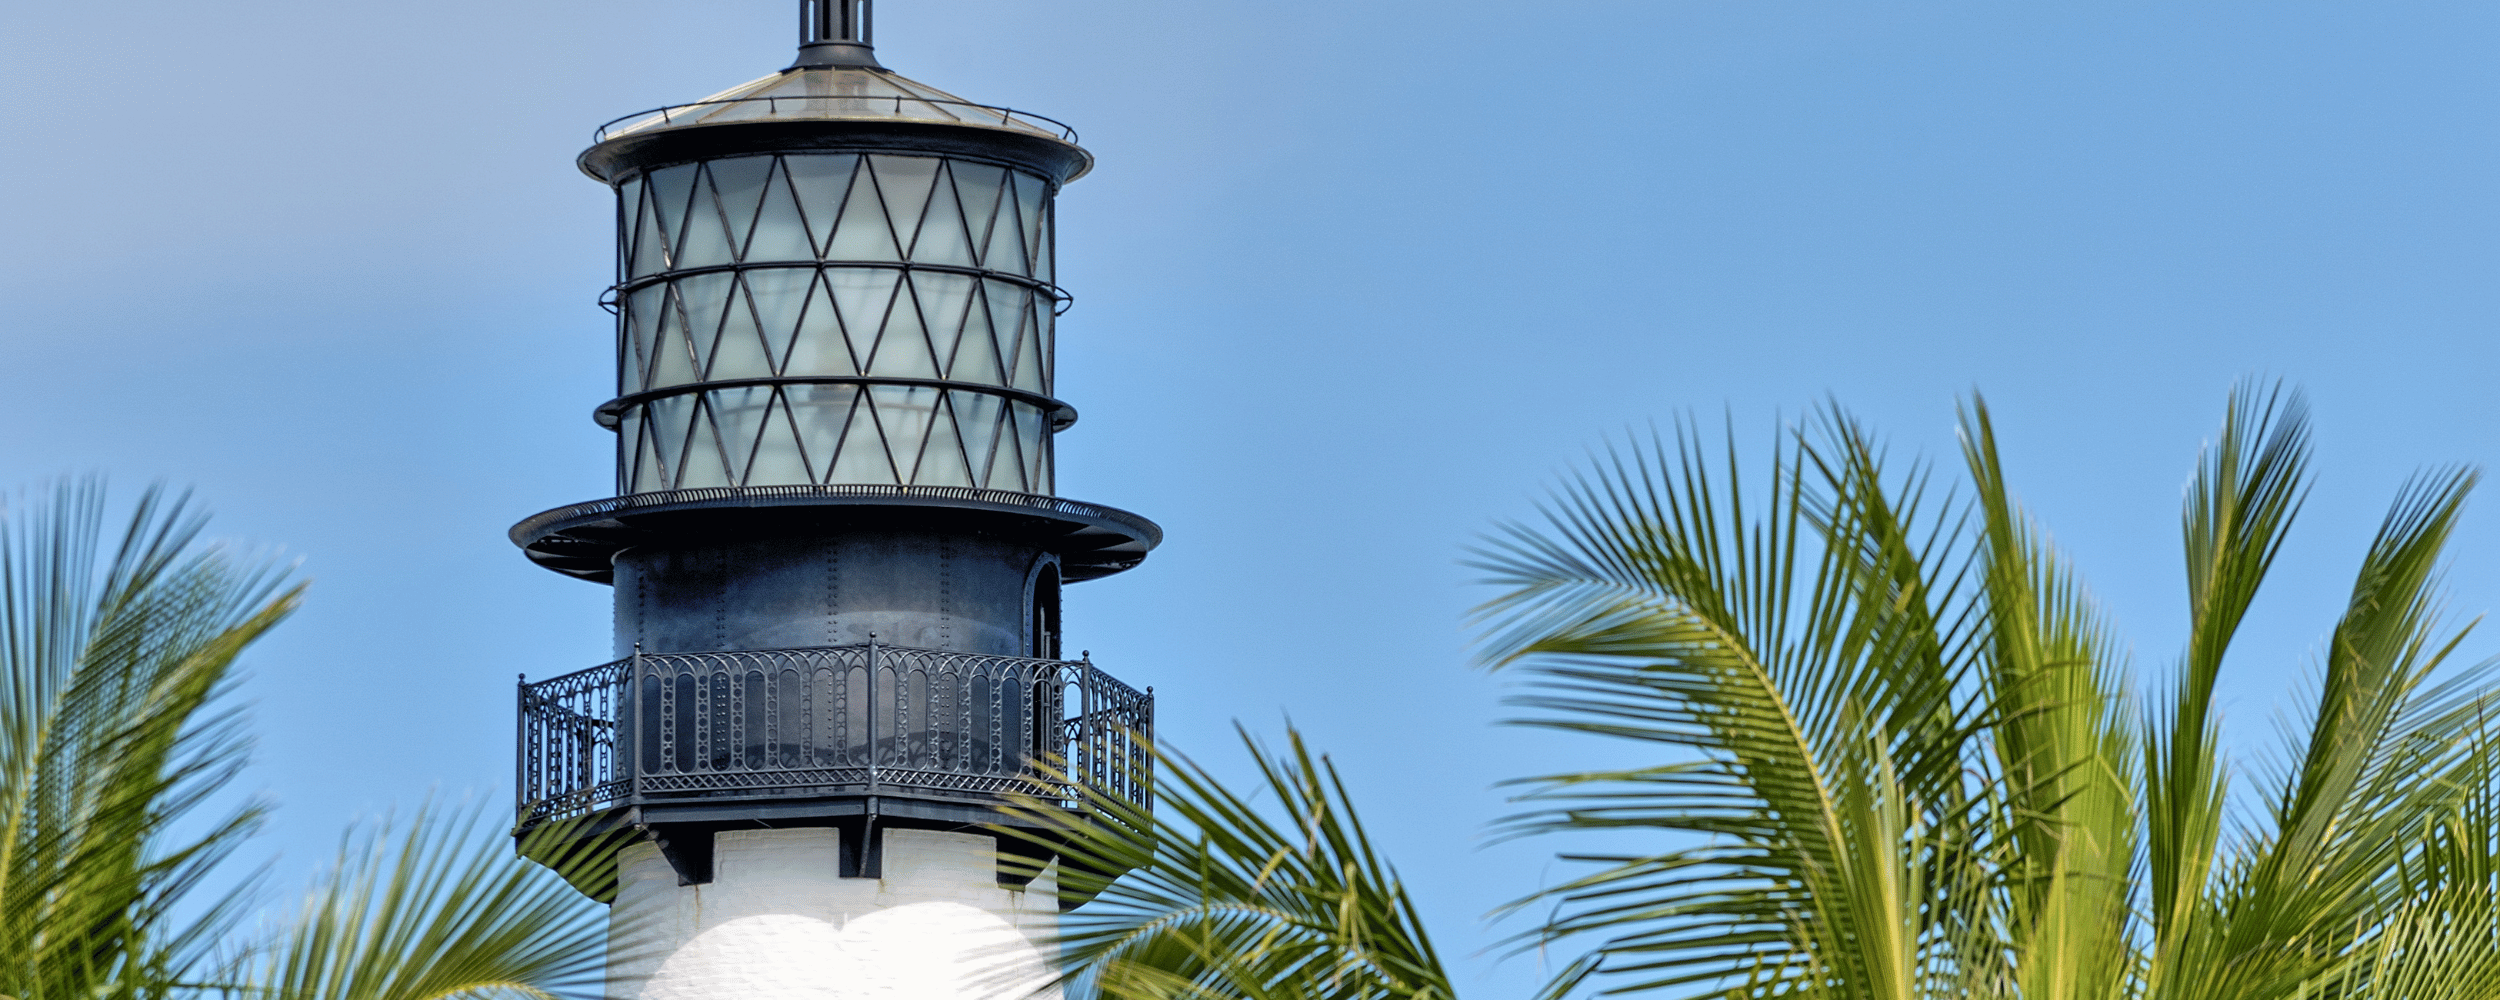 sombrero key lighthouse in florida